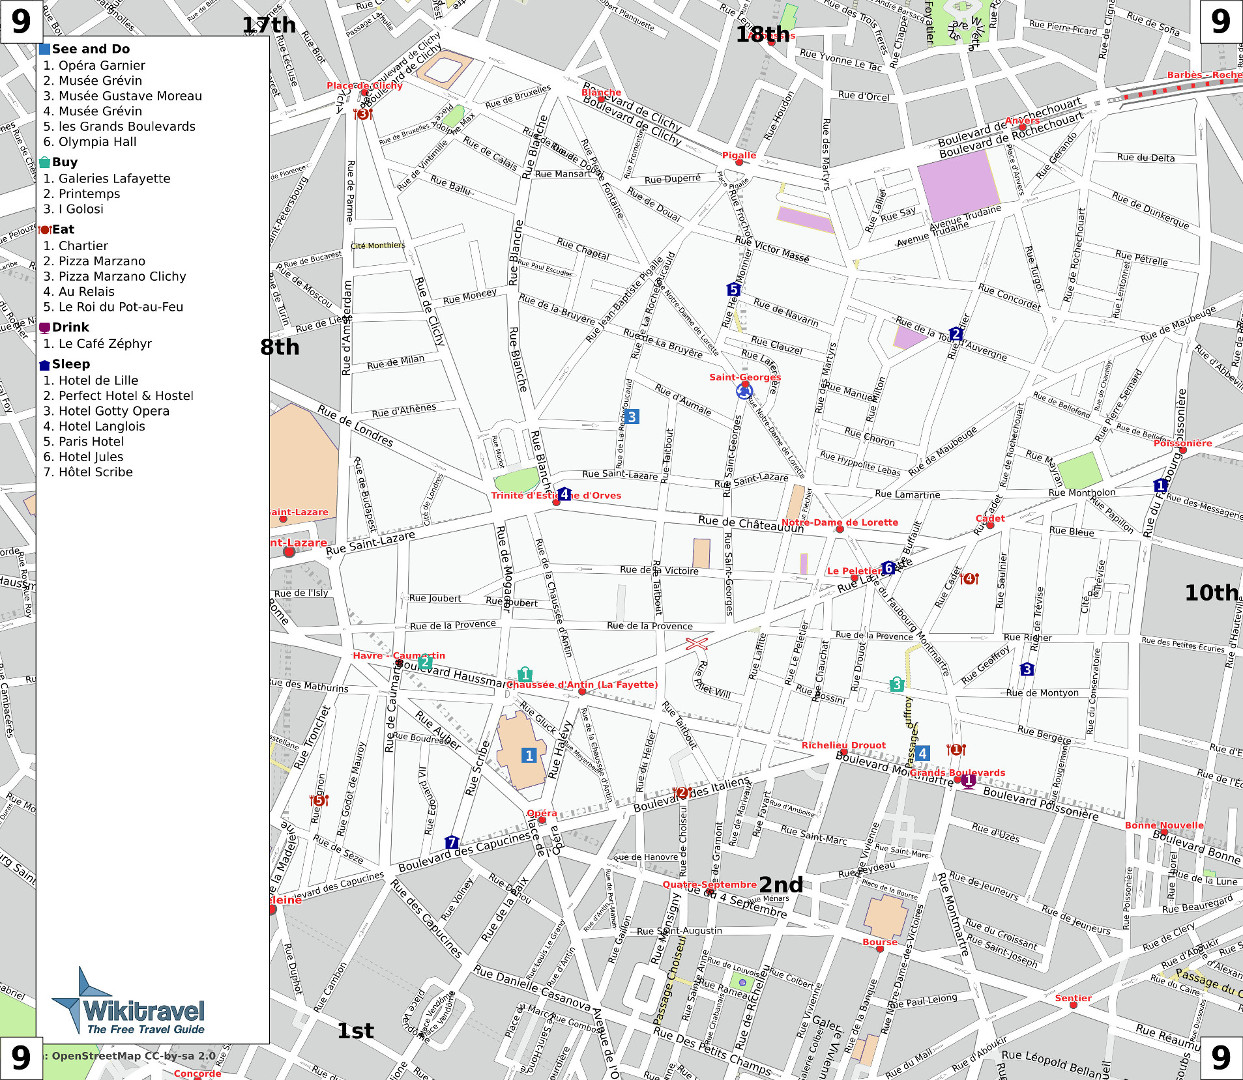 Paris 9th arrondissement map with listings.jpg